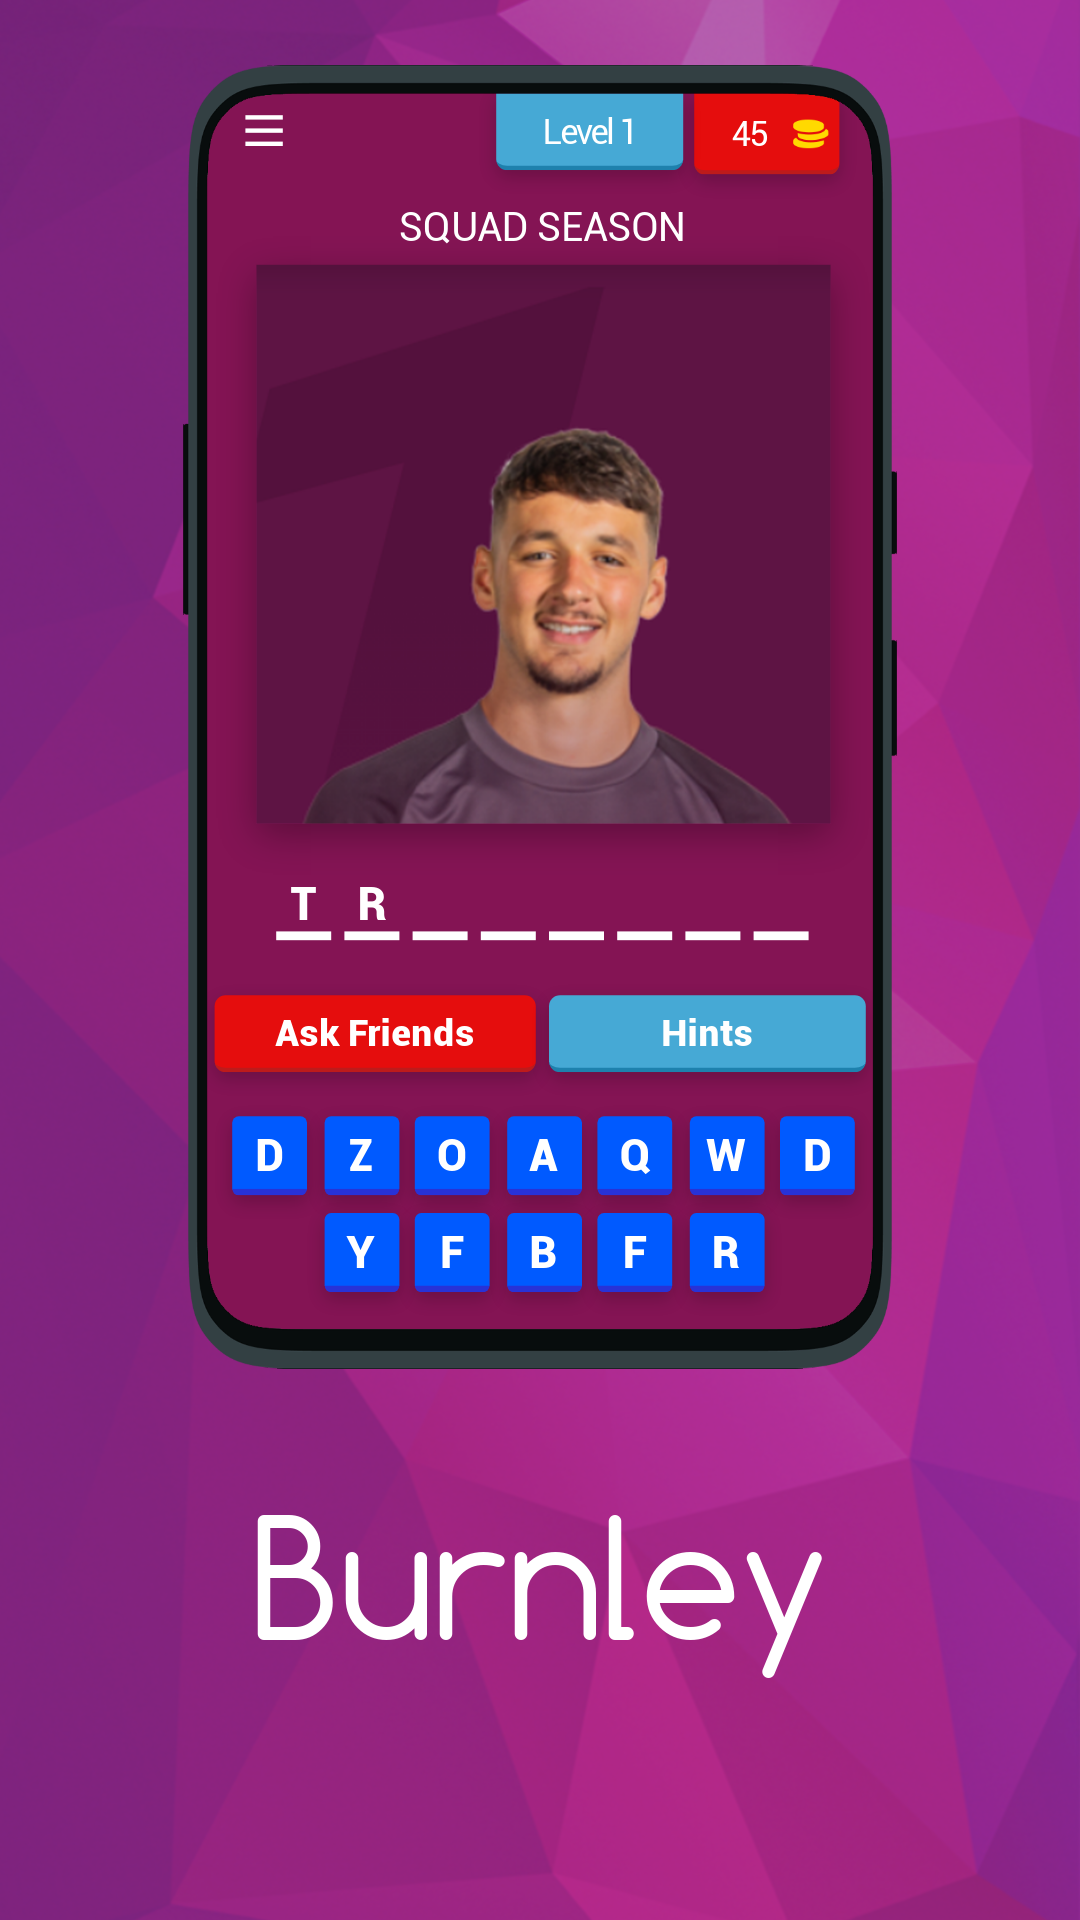 Liga C Rompecabezas de fútbol version móvil androide iOS-TapTap